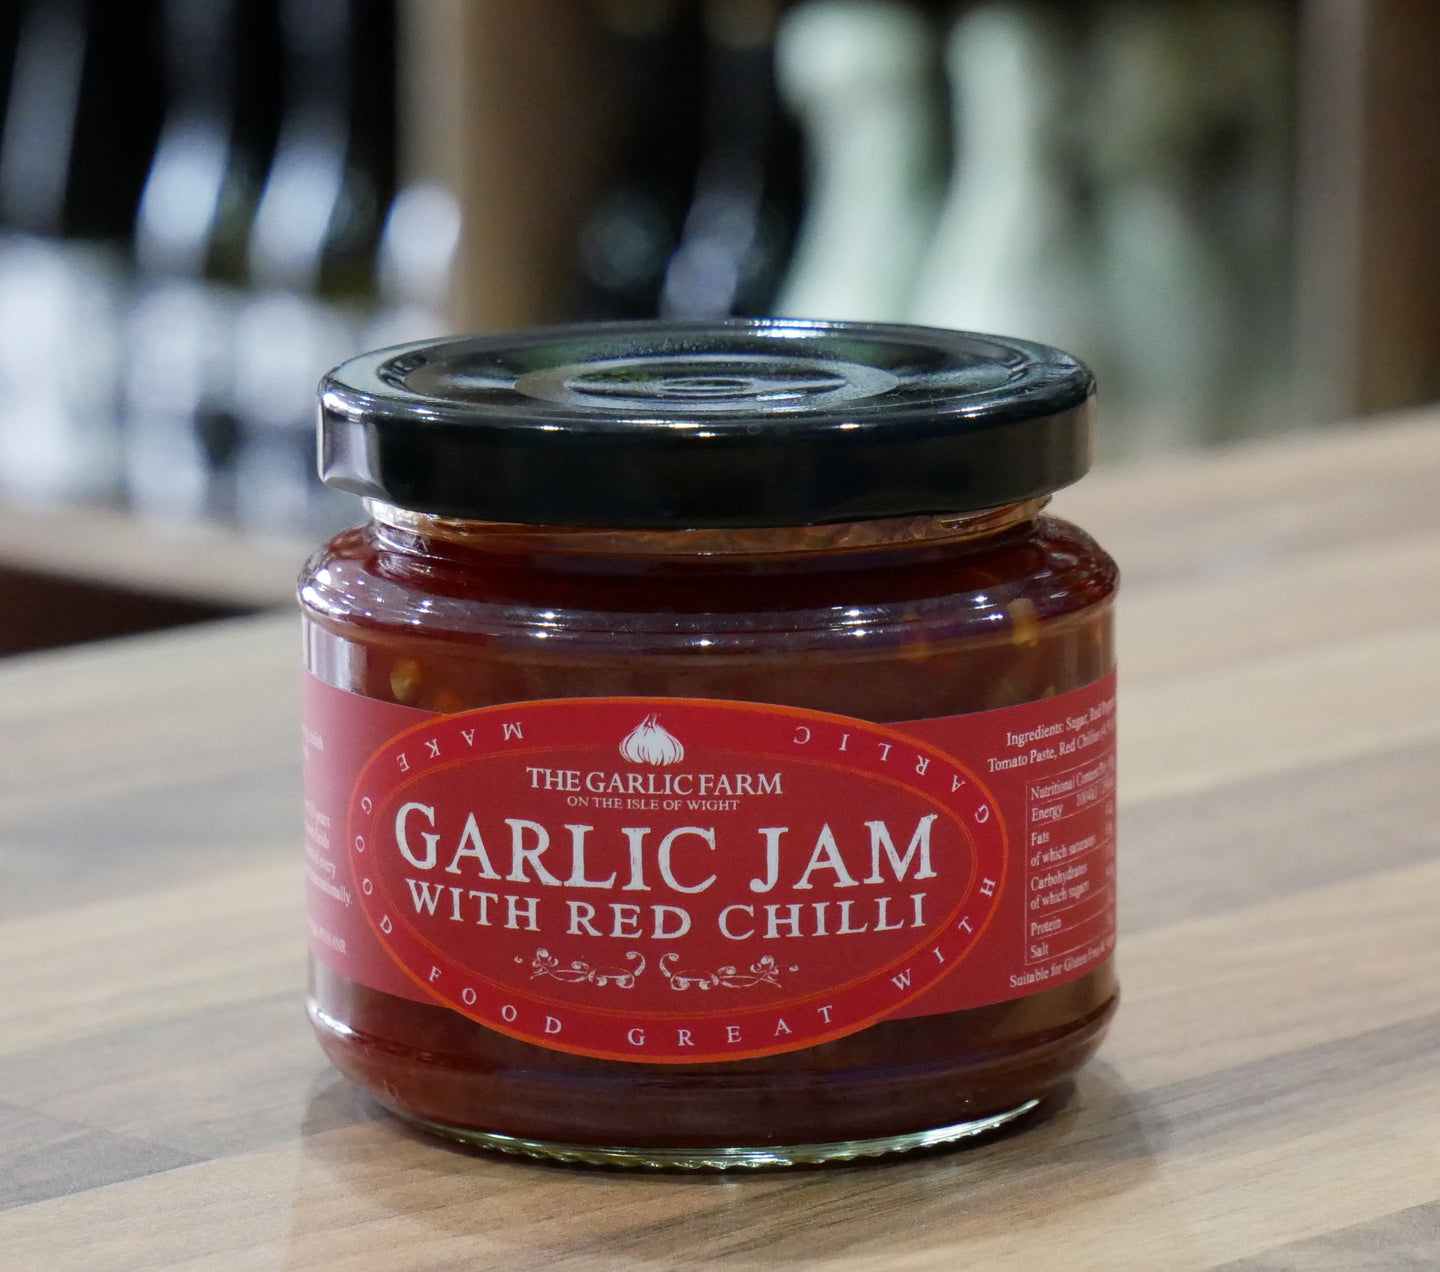 The Garlic Farm Garlic Jam with Red Chilli